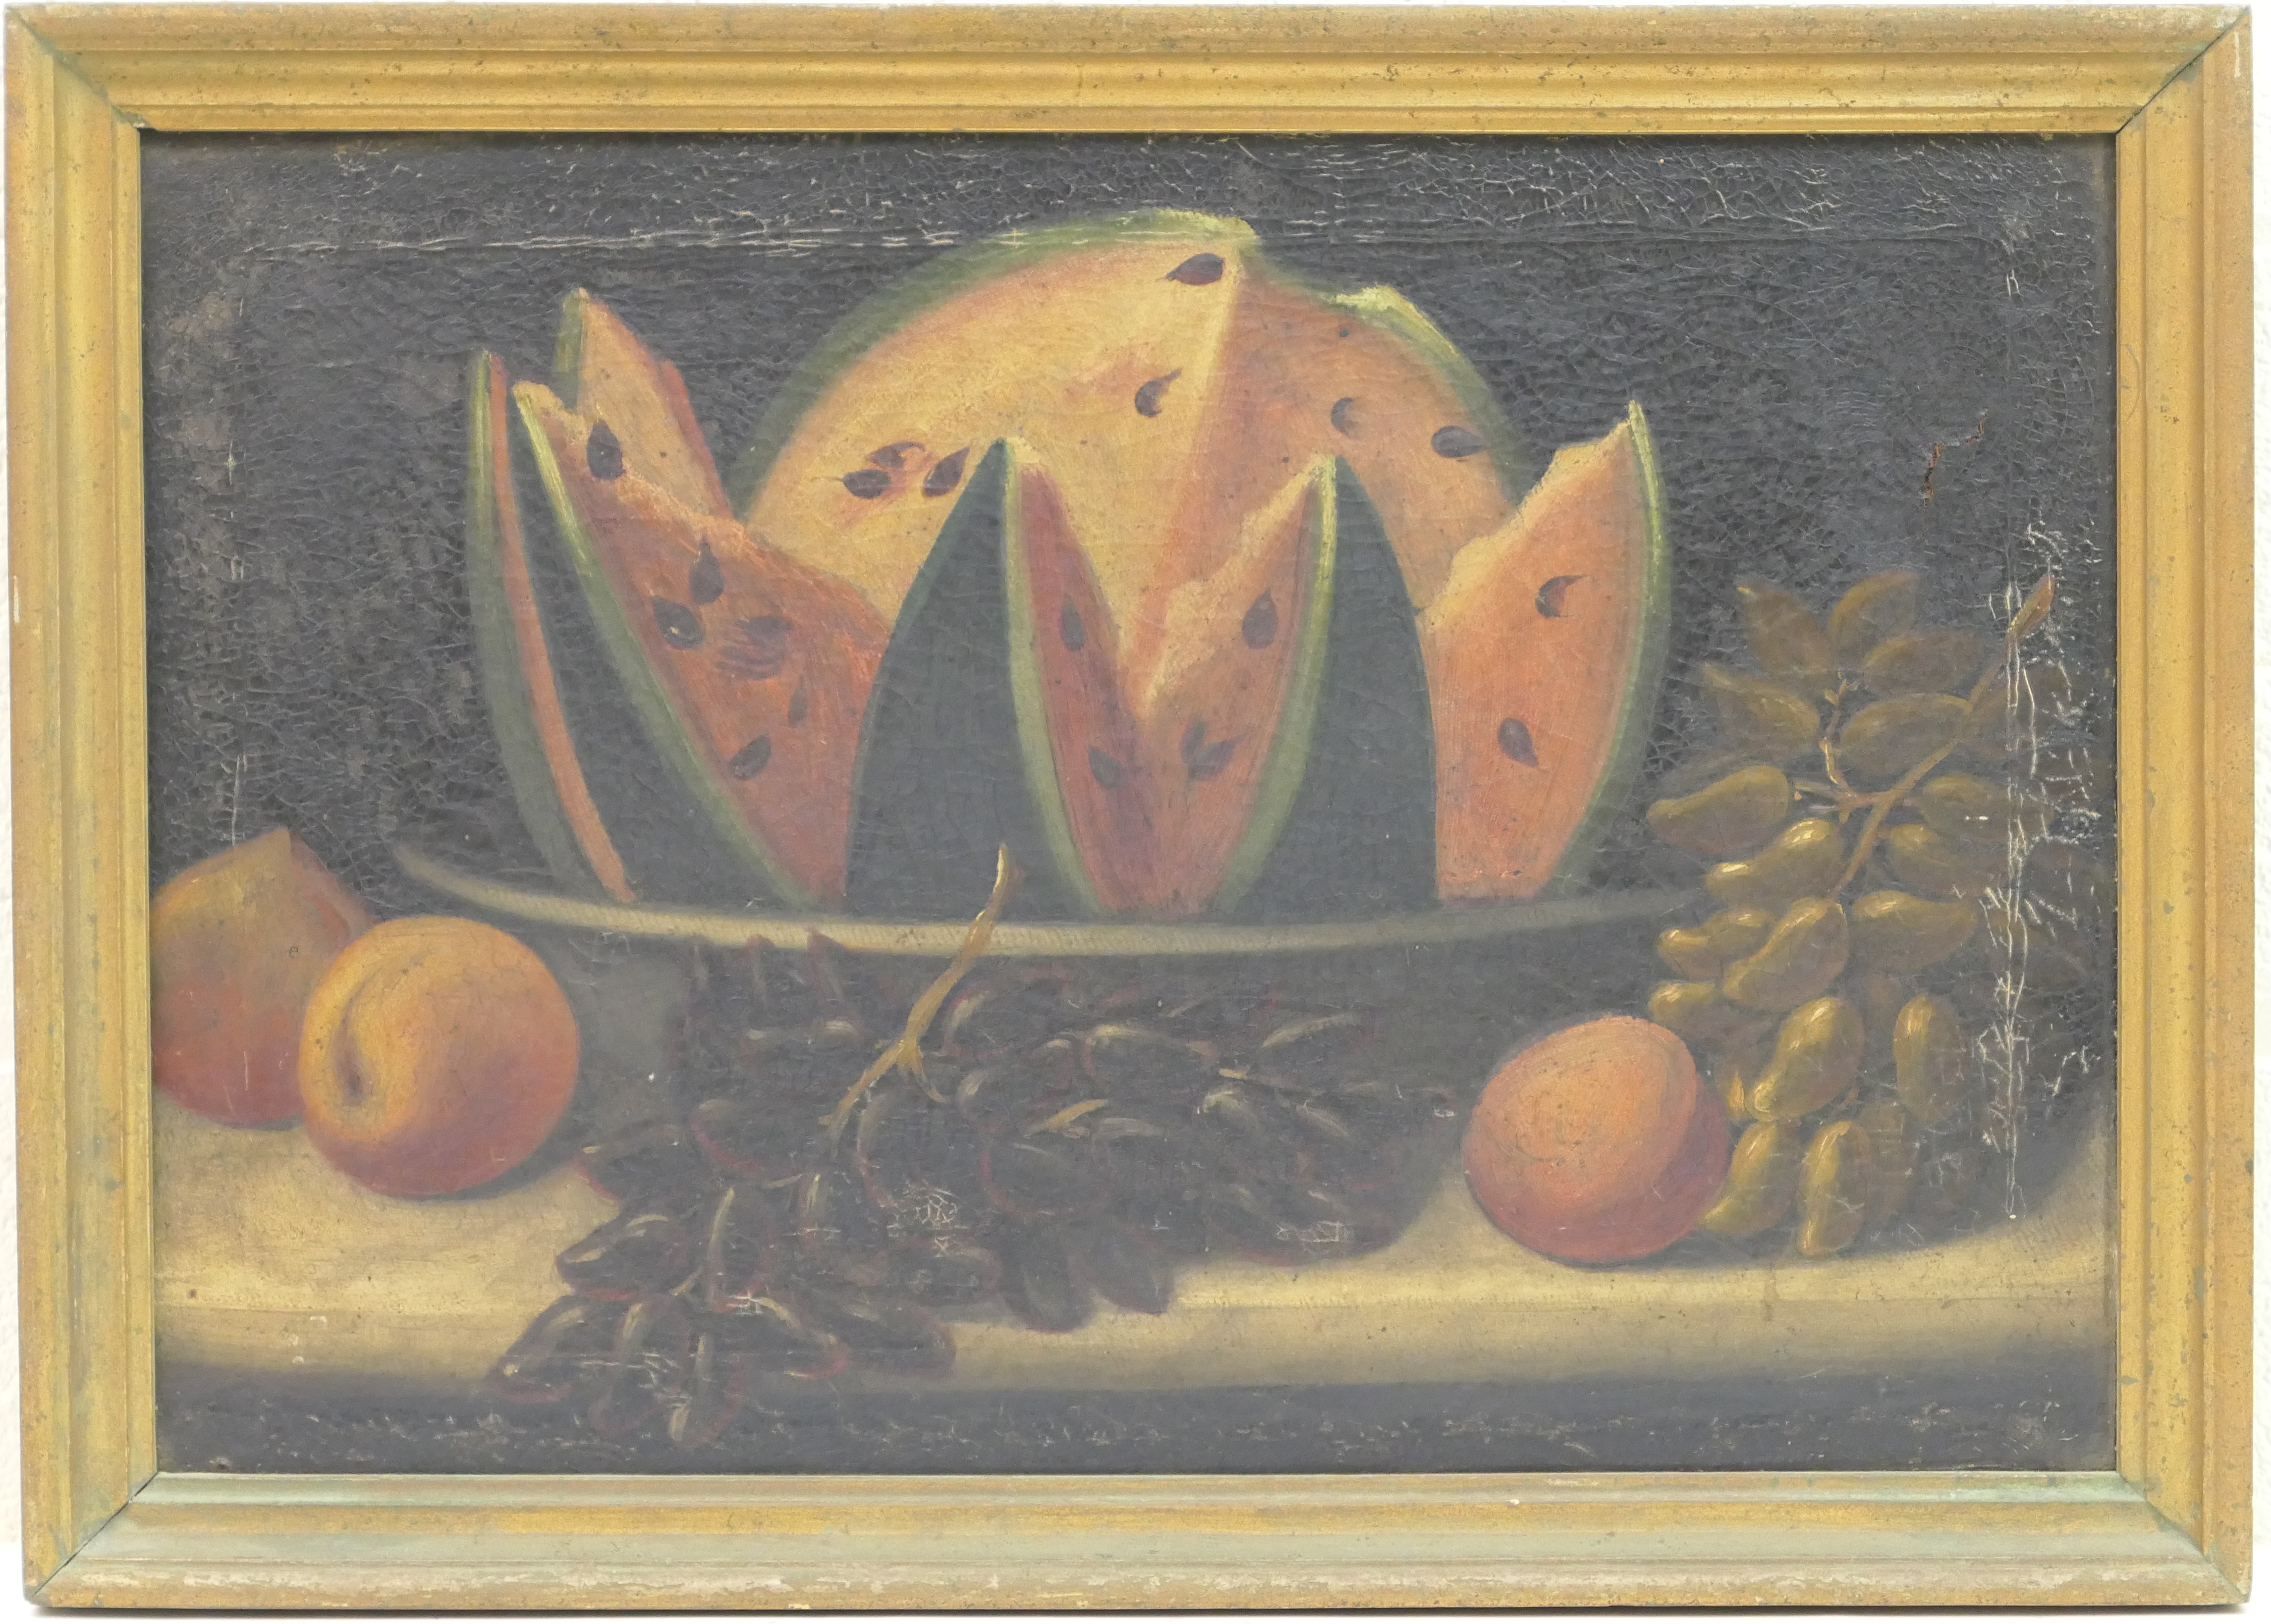 Maltese School (19th Century), Set of four still life studies, fruits on a ledge, oils on canvas, - Image 4 of 6